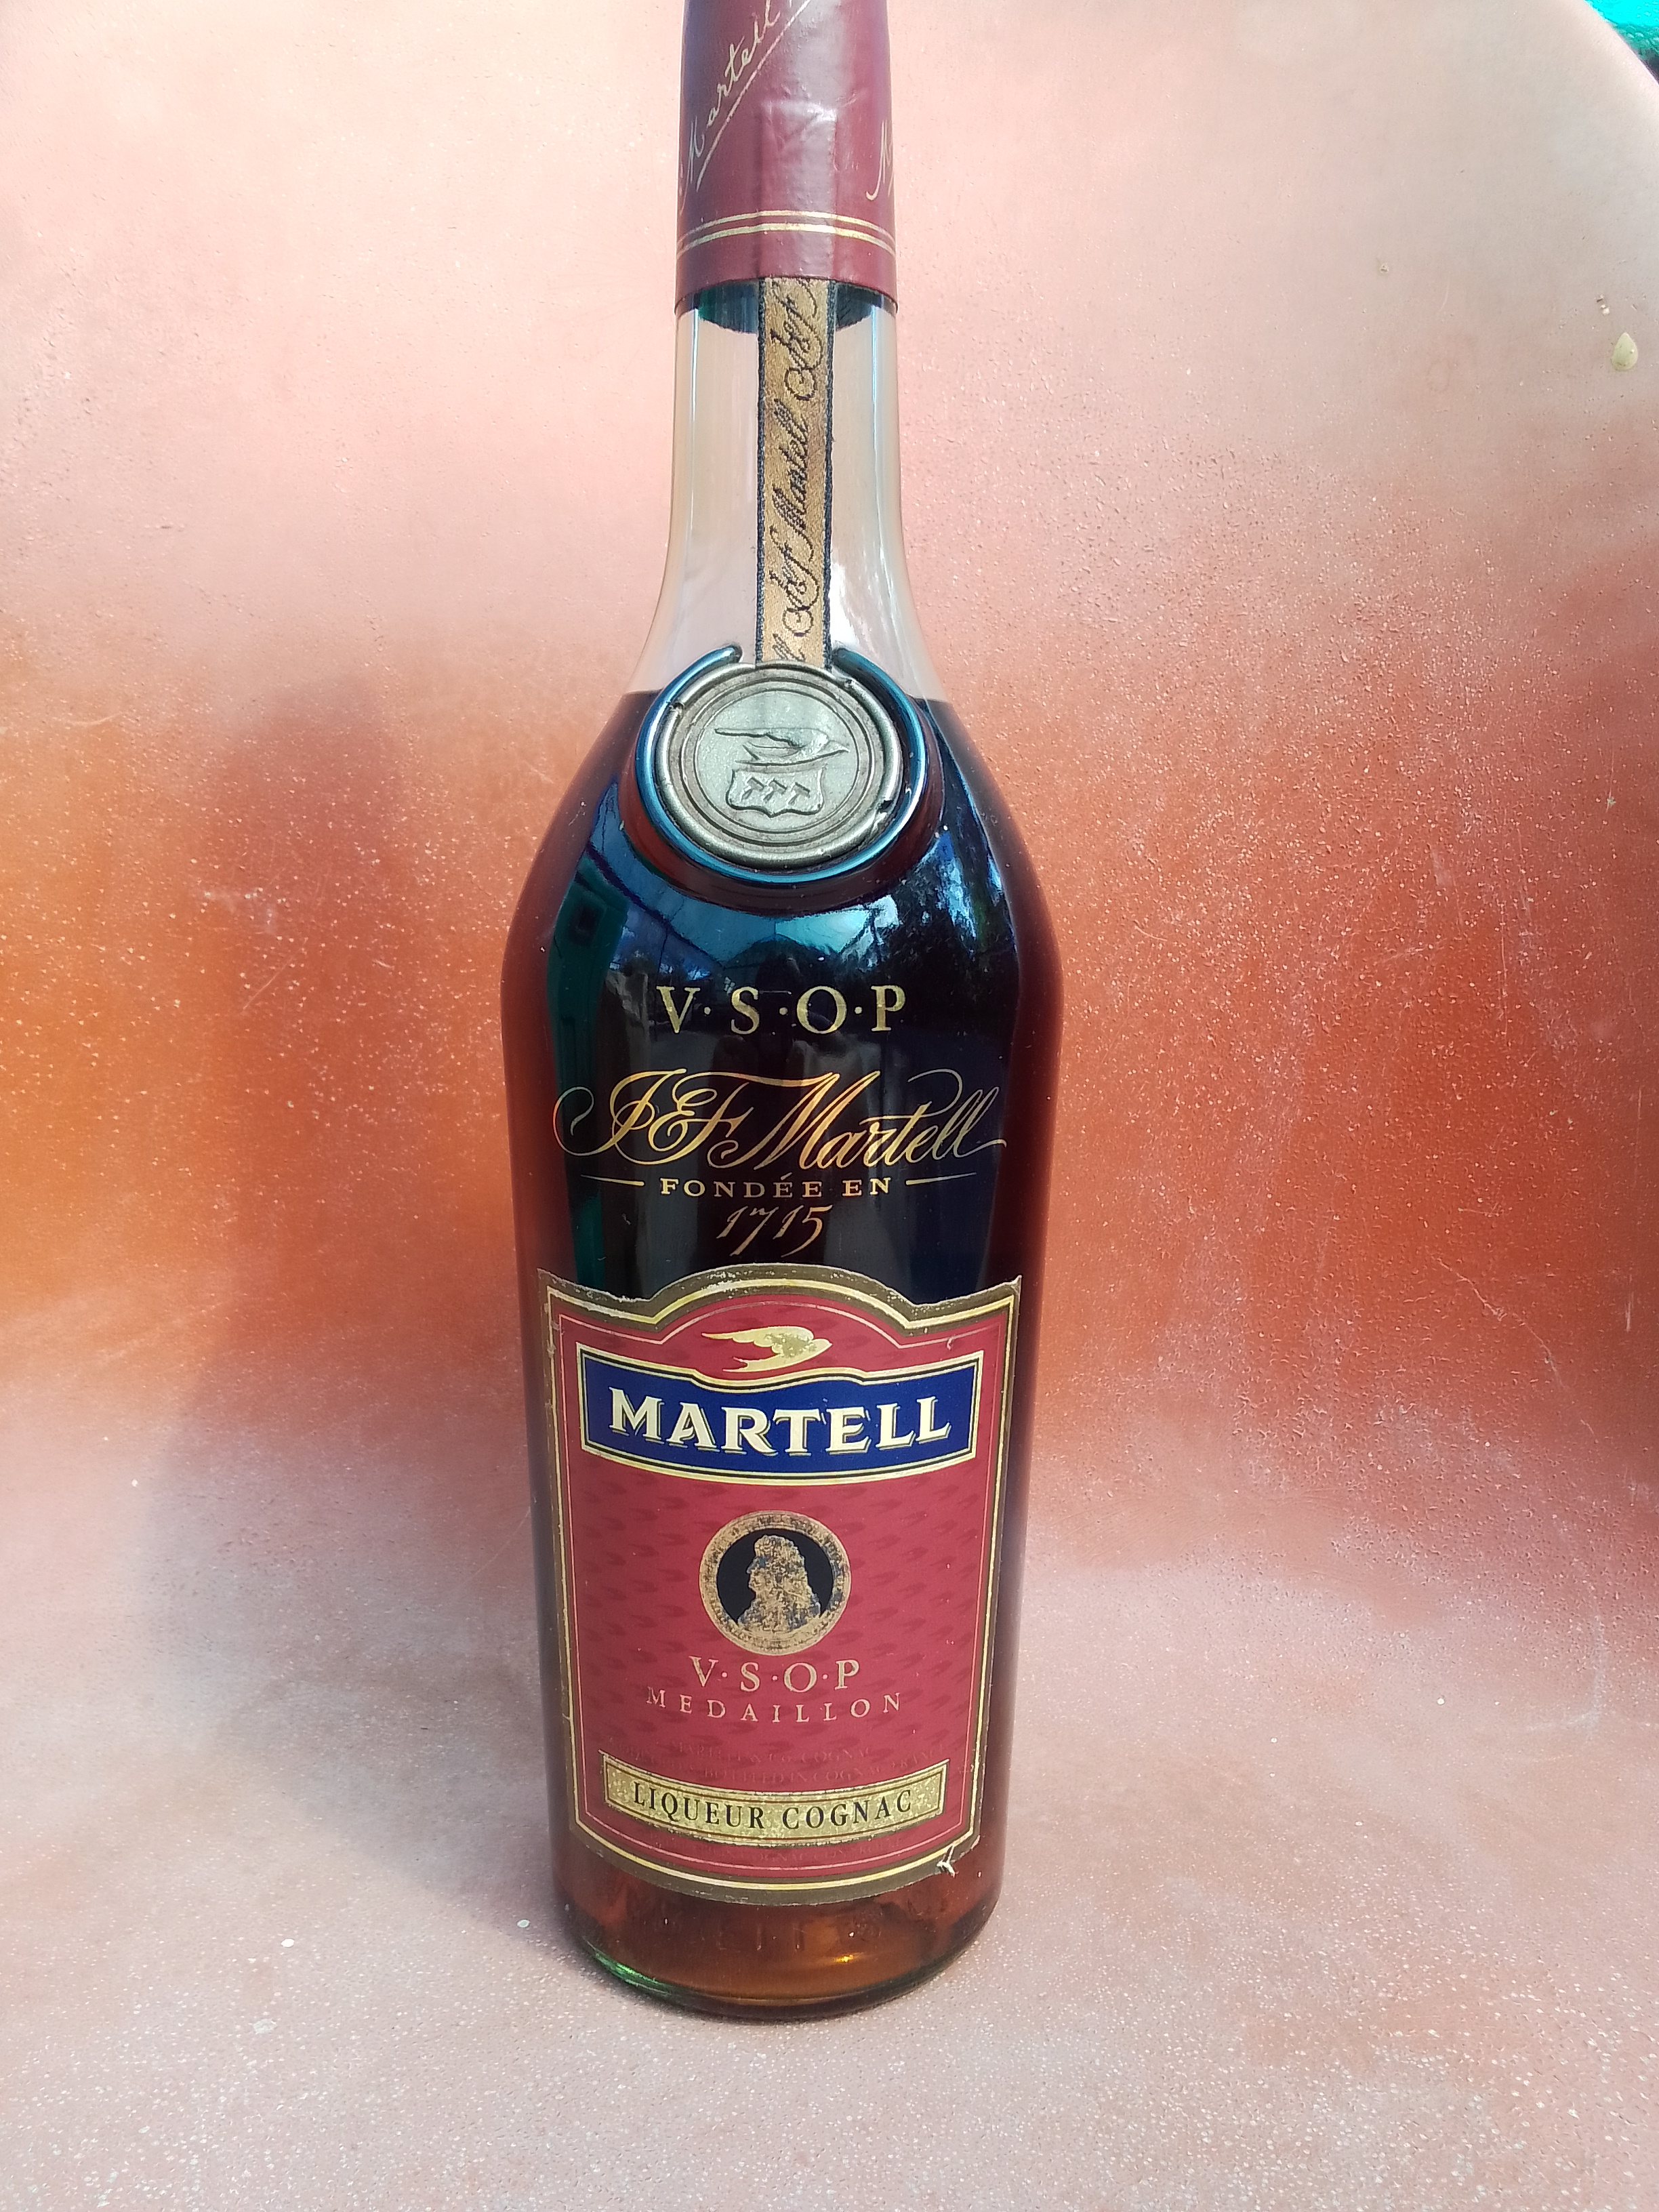 Martell Cognac Martell, Medaillon VSOP, Liqueur Cognac.1